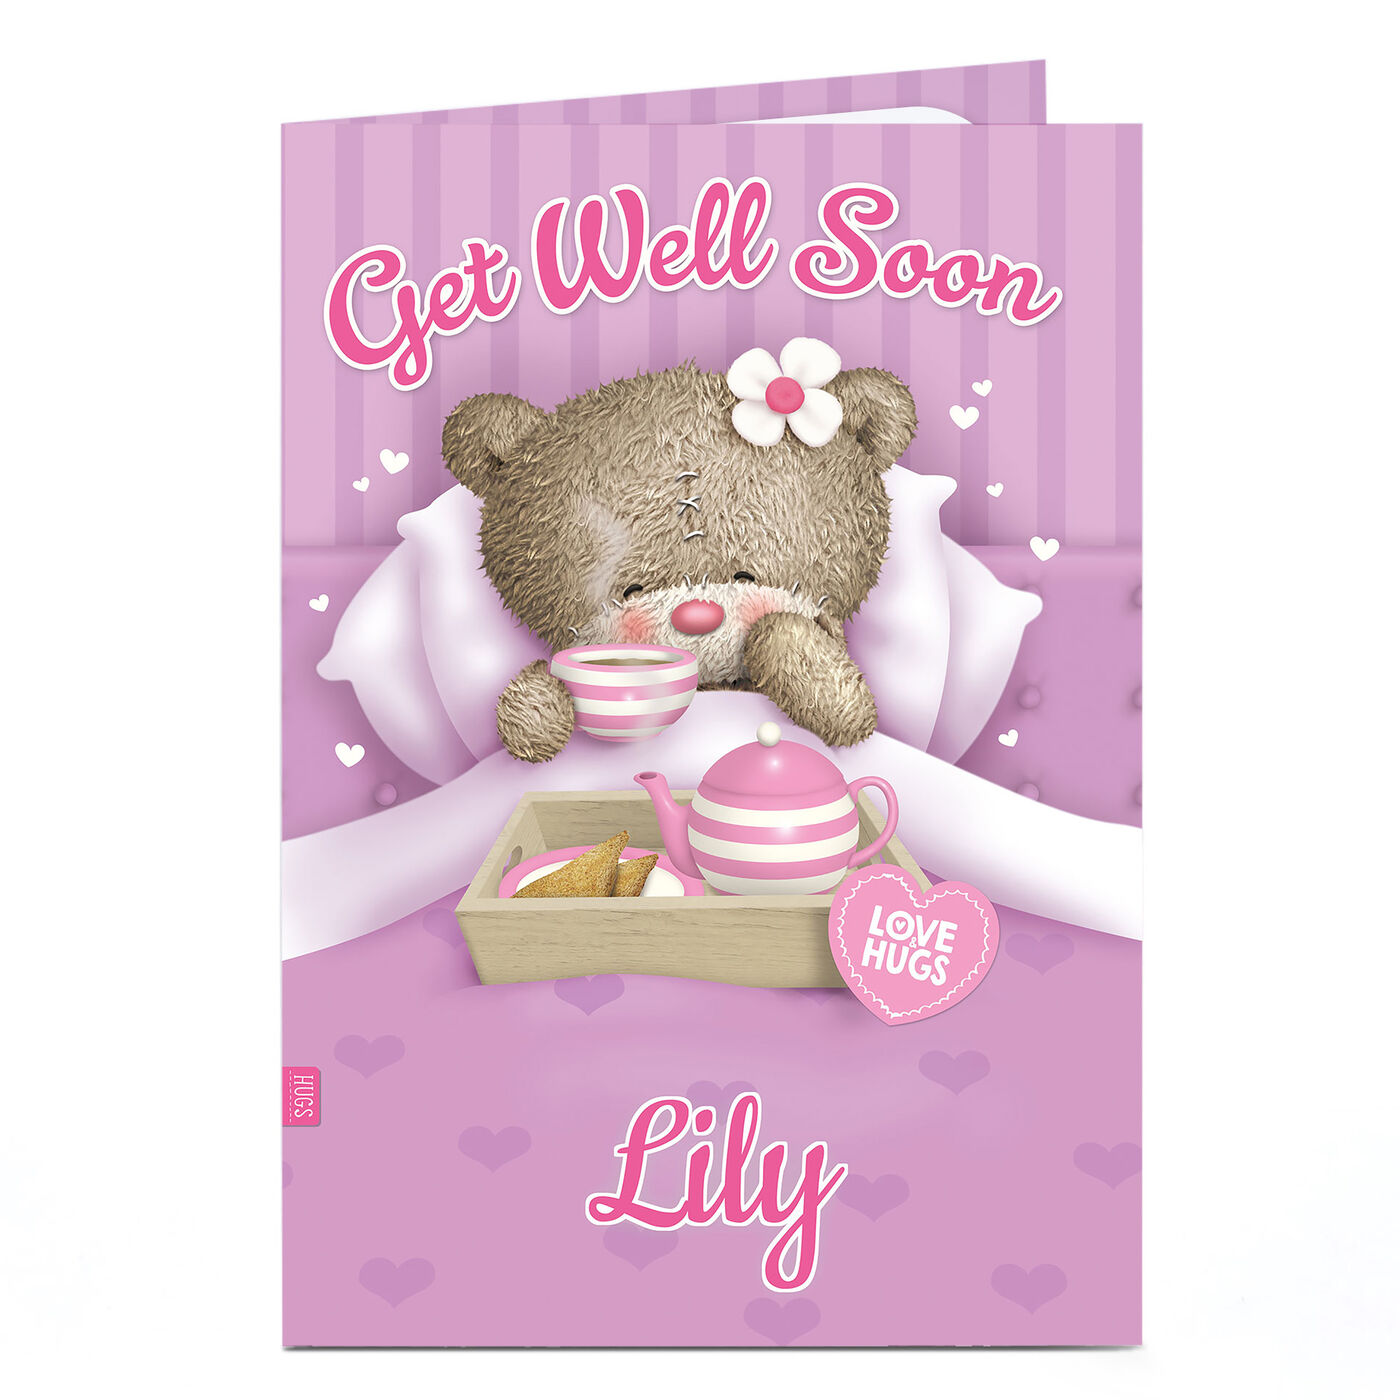 Personalized Teddy Bear Get Well Soon Card